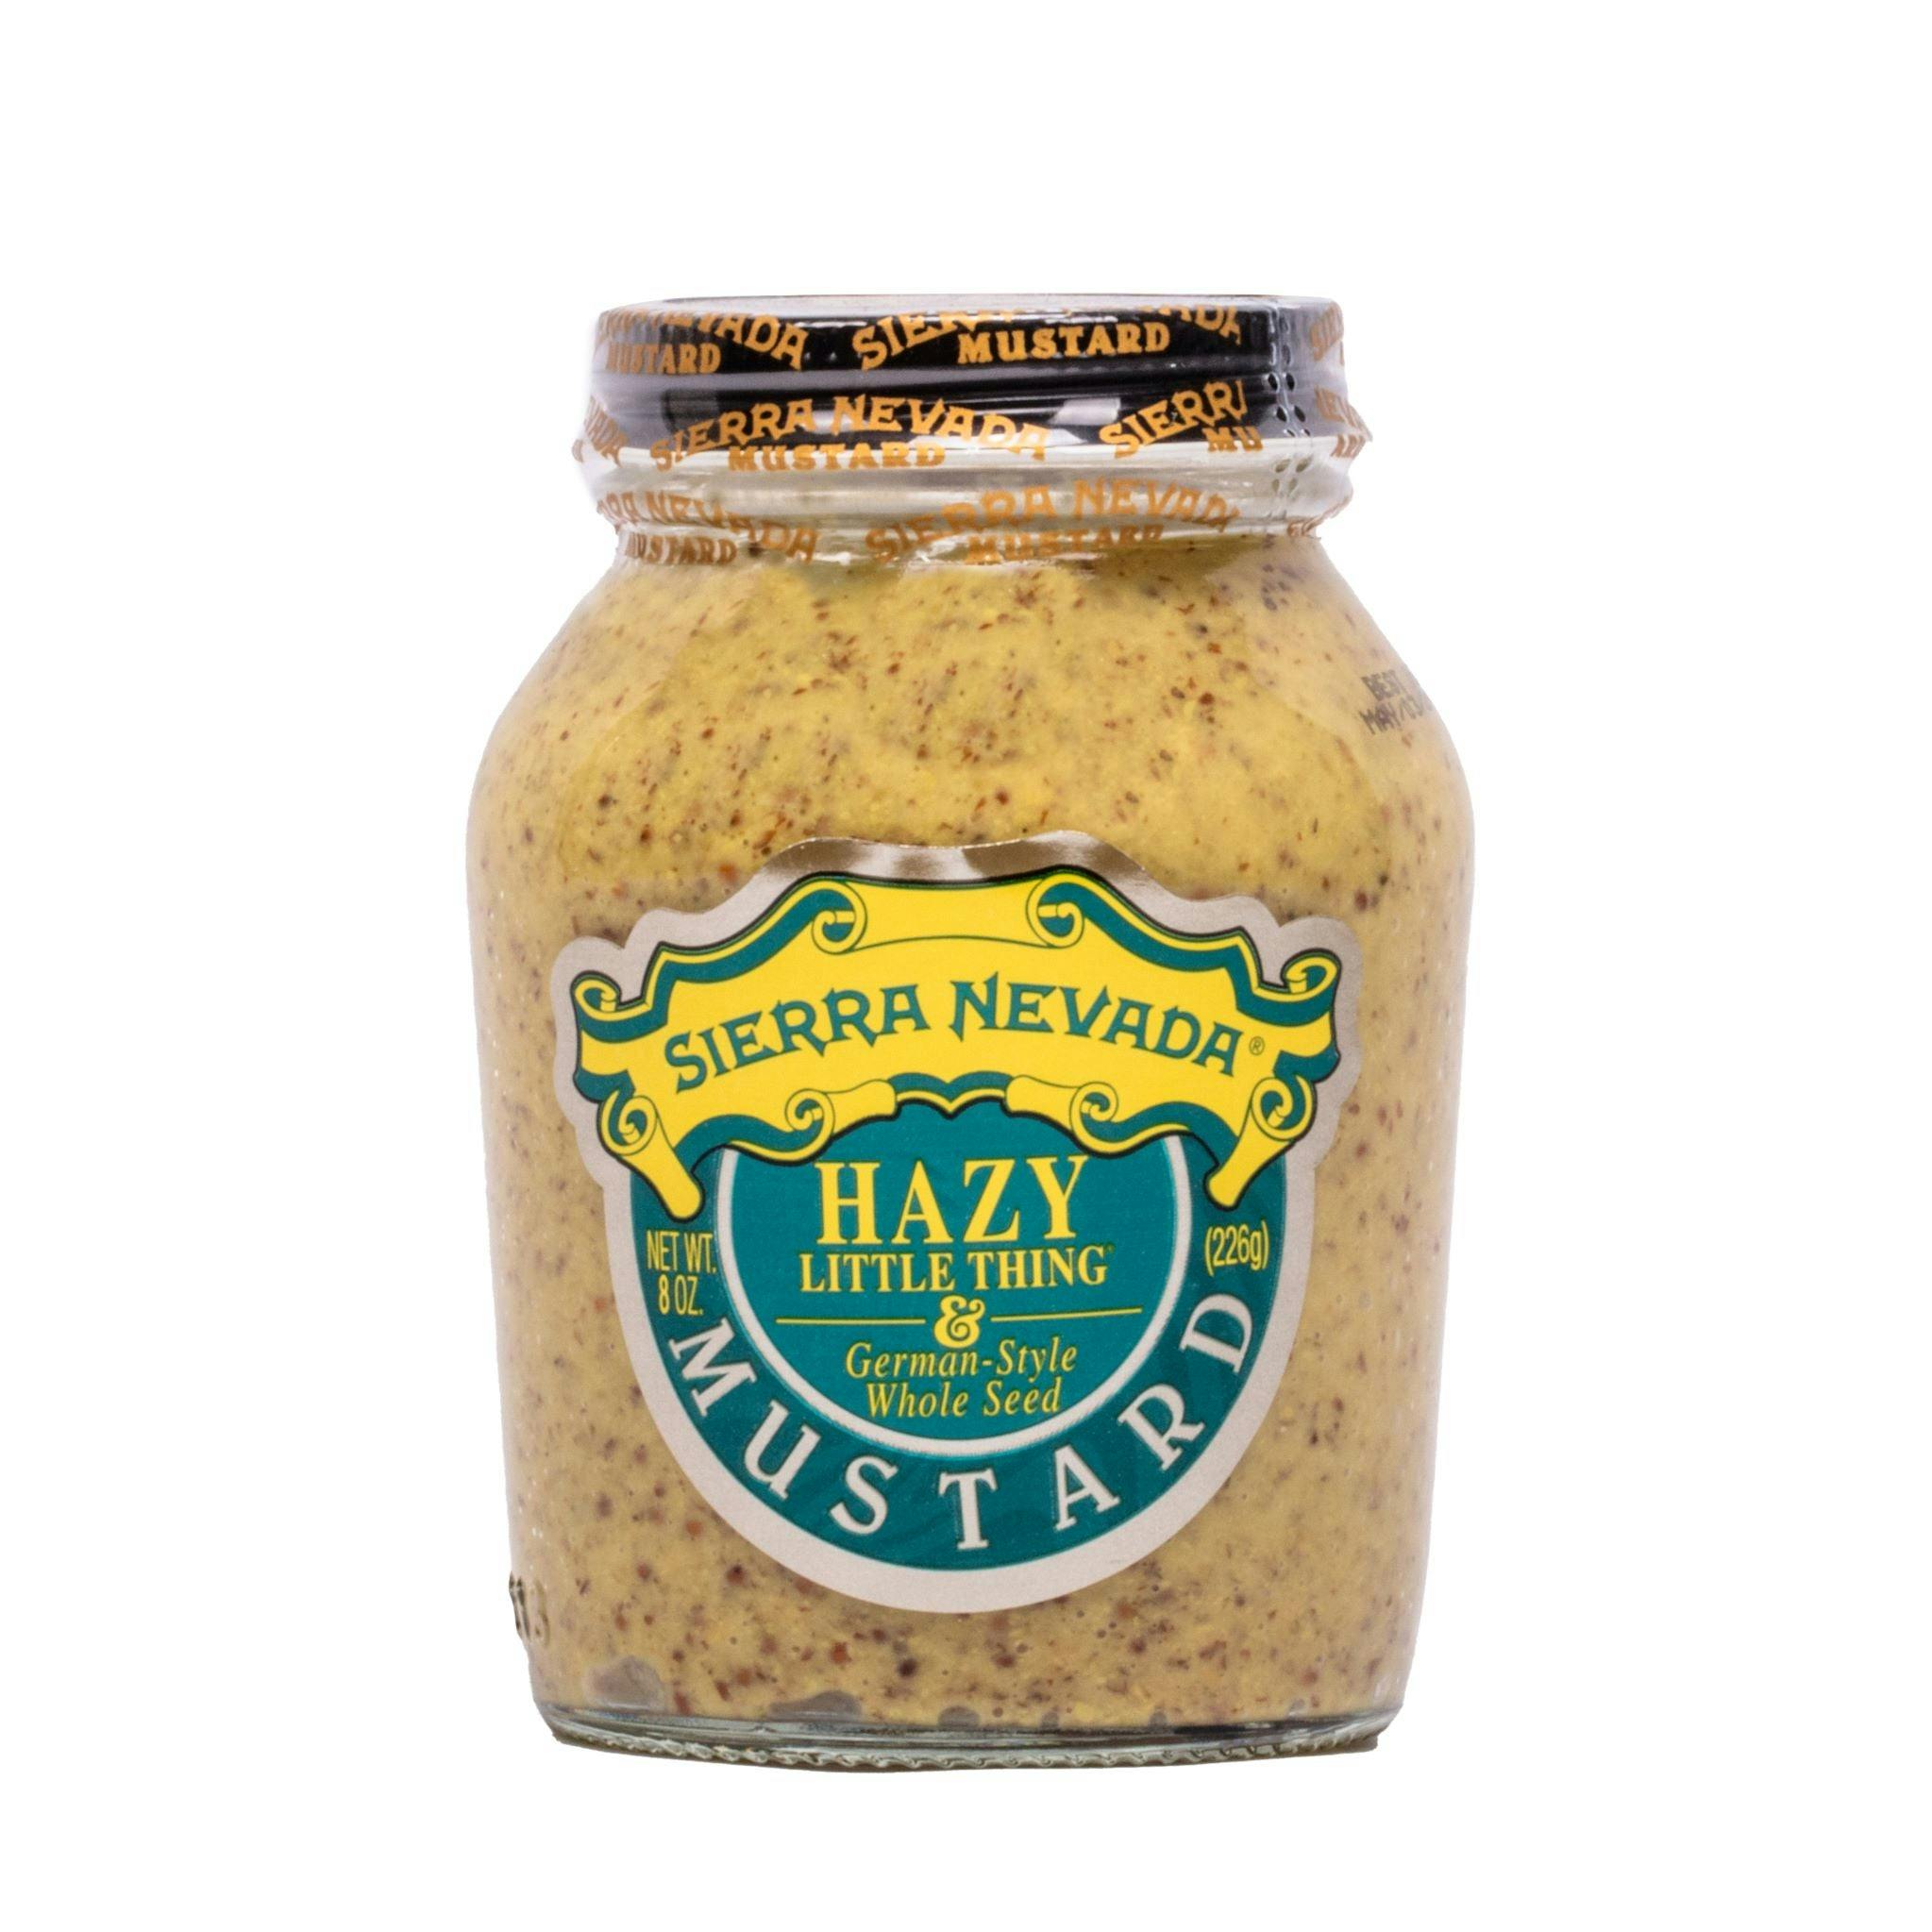 Sierra Nevada Hazy Little Thing mustard jar